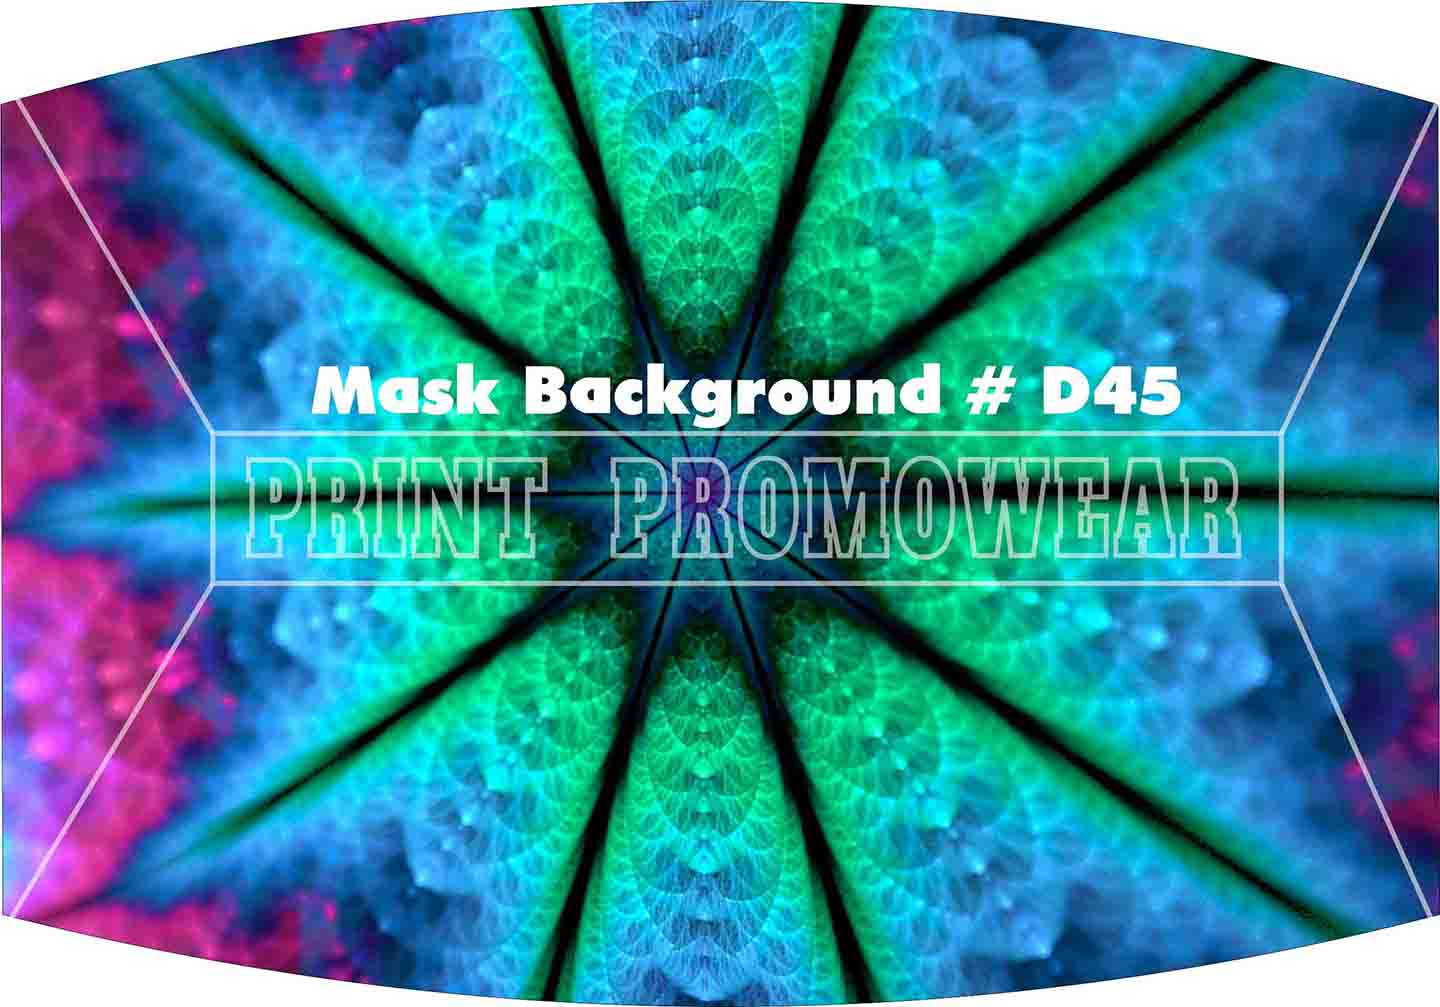 Image/MaskBackground/d45.jpg